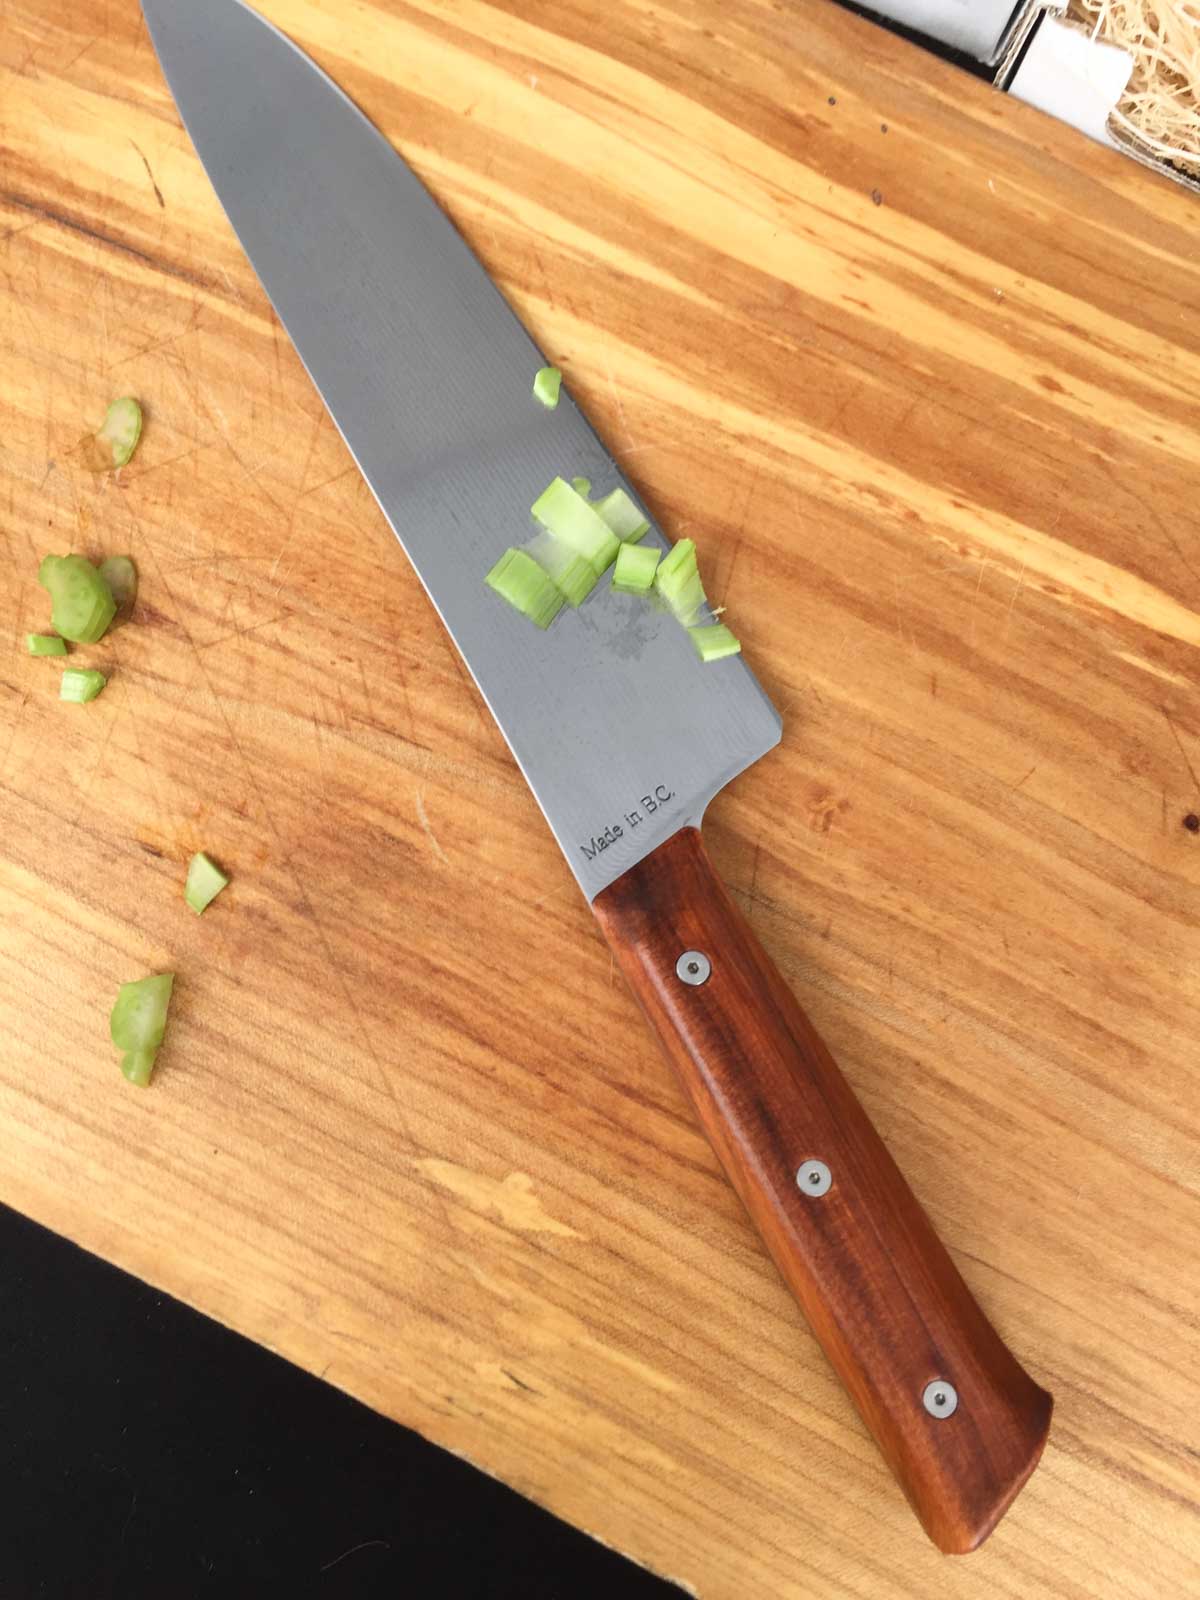 north-arm-chef-knife.jpg